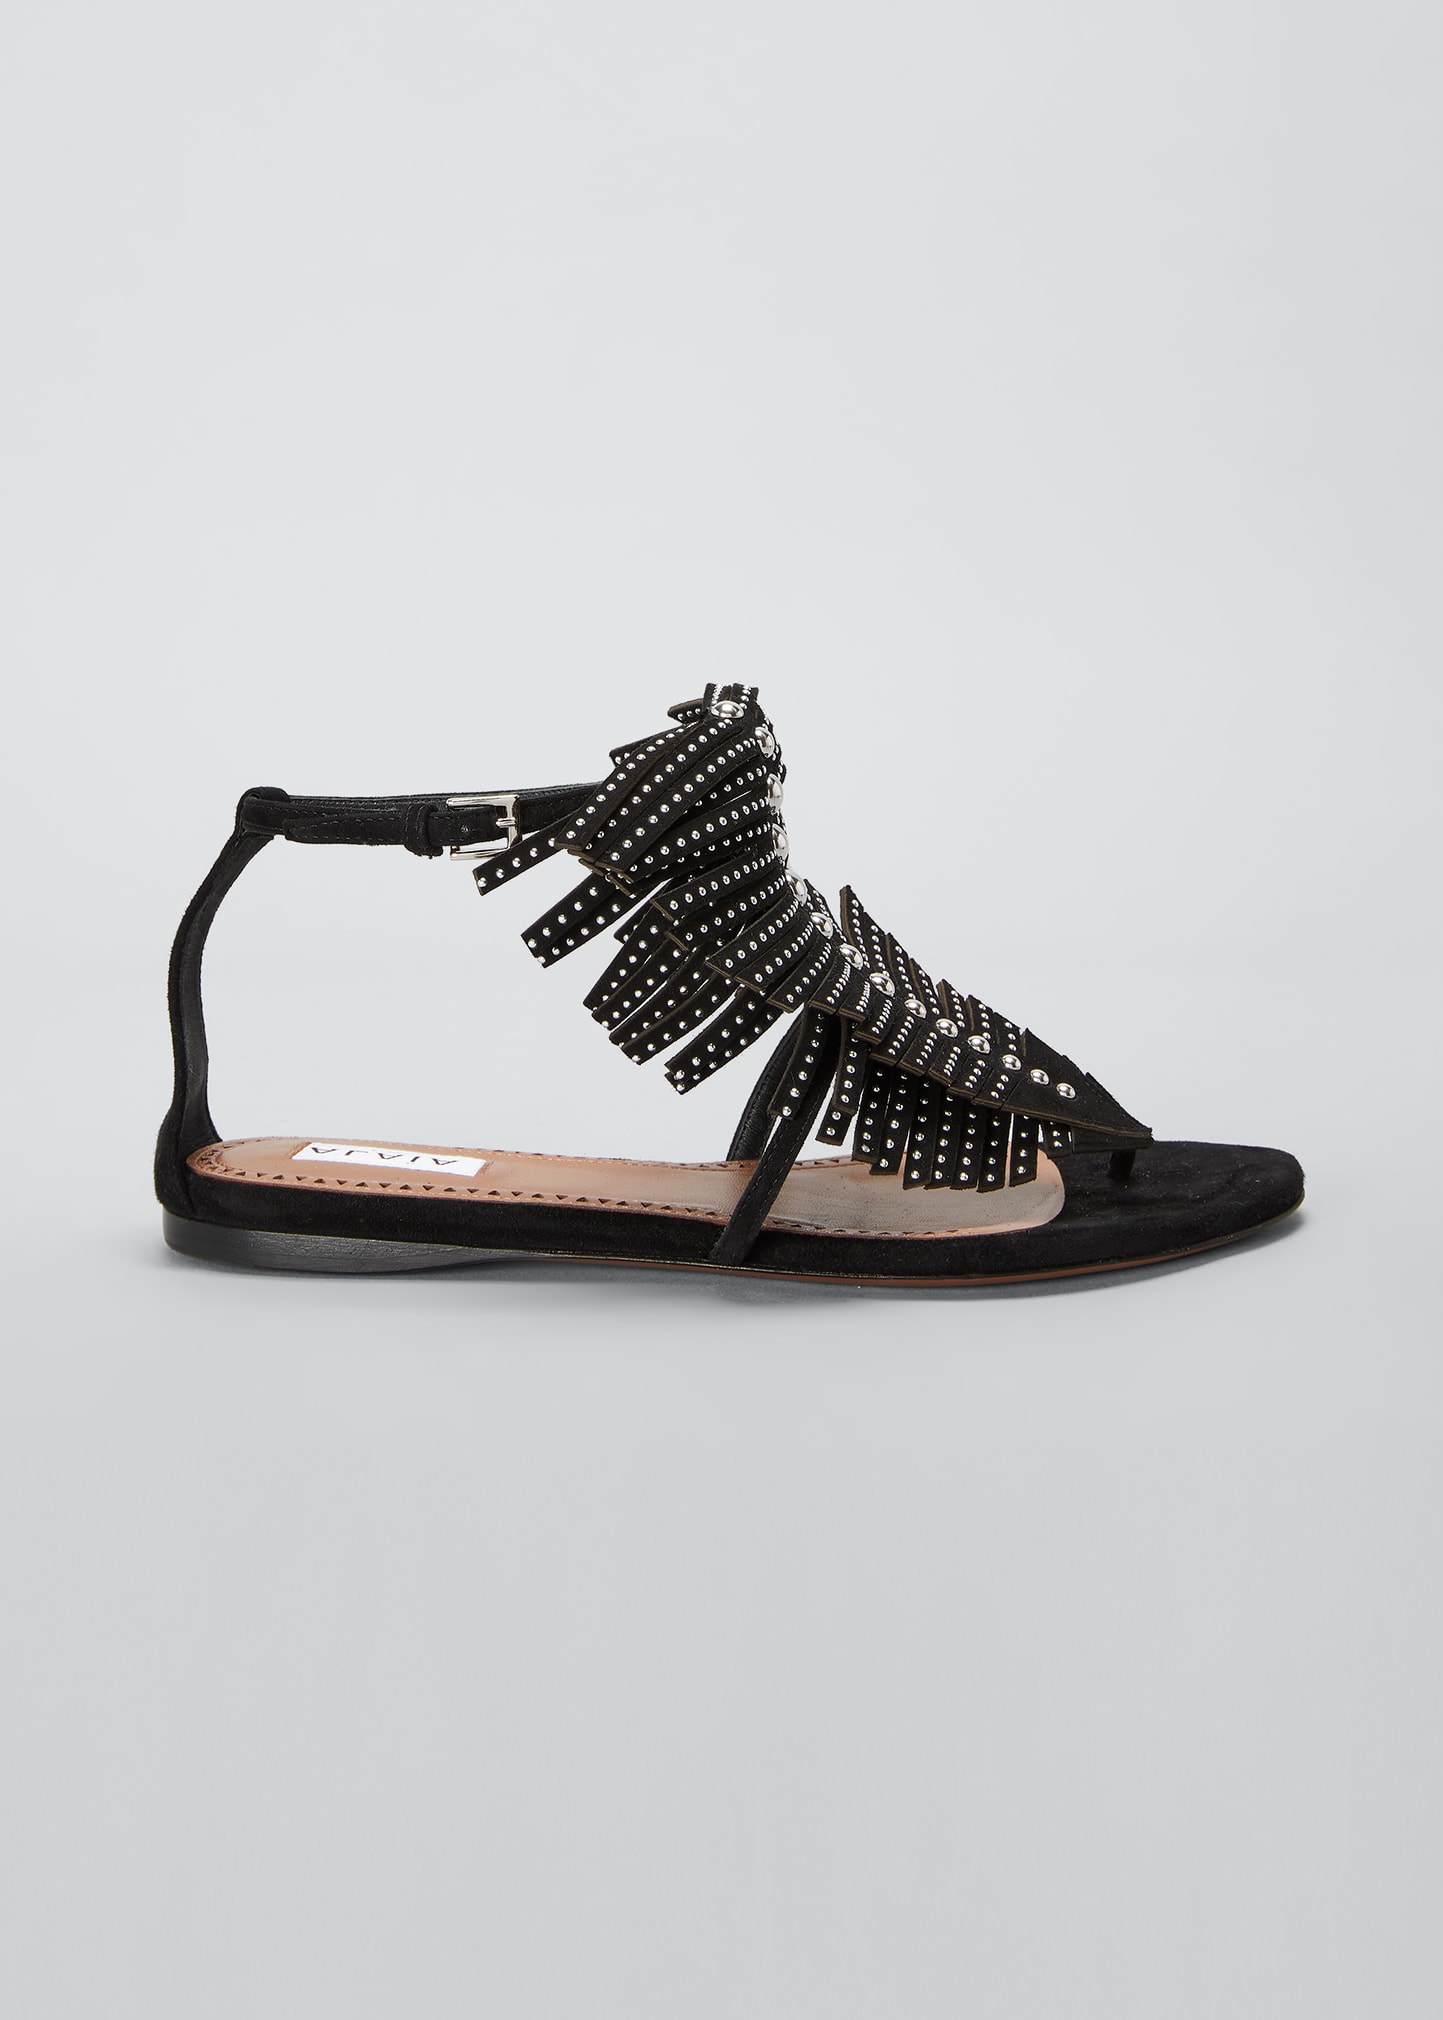 Alaïa Studded Suede Strappy Flat Sandals In Noir | ModeSens